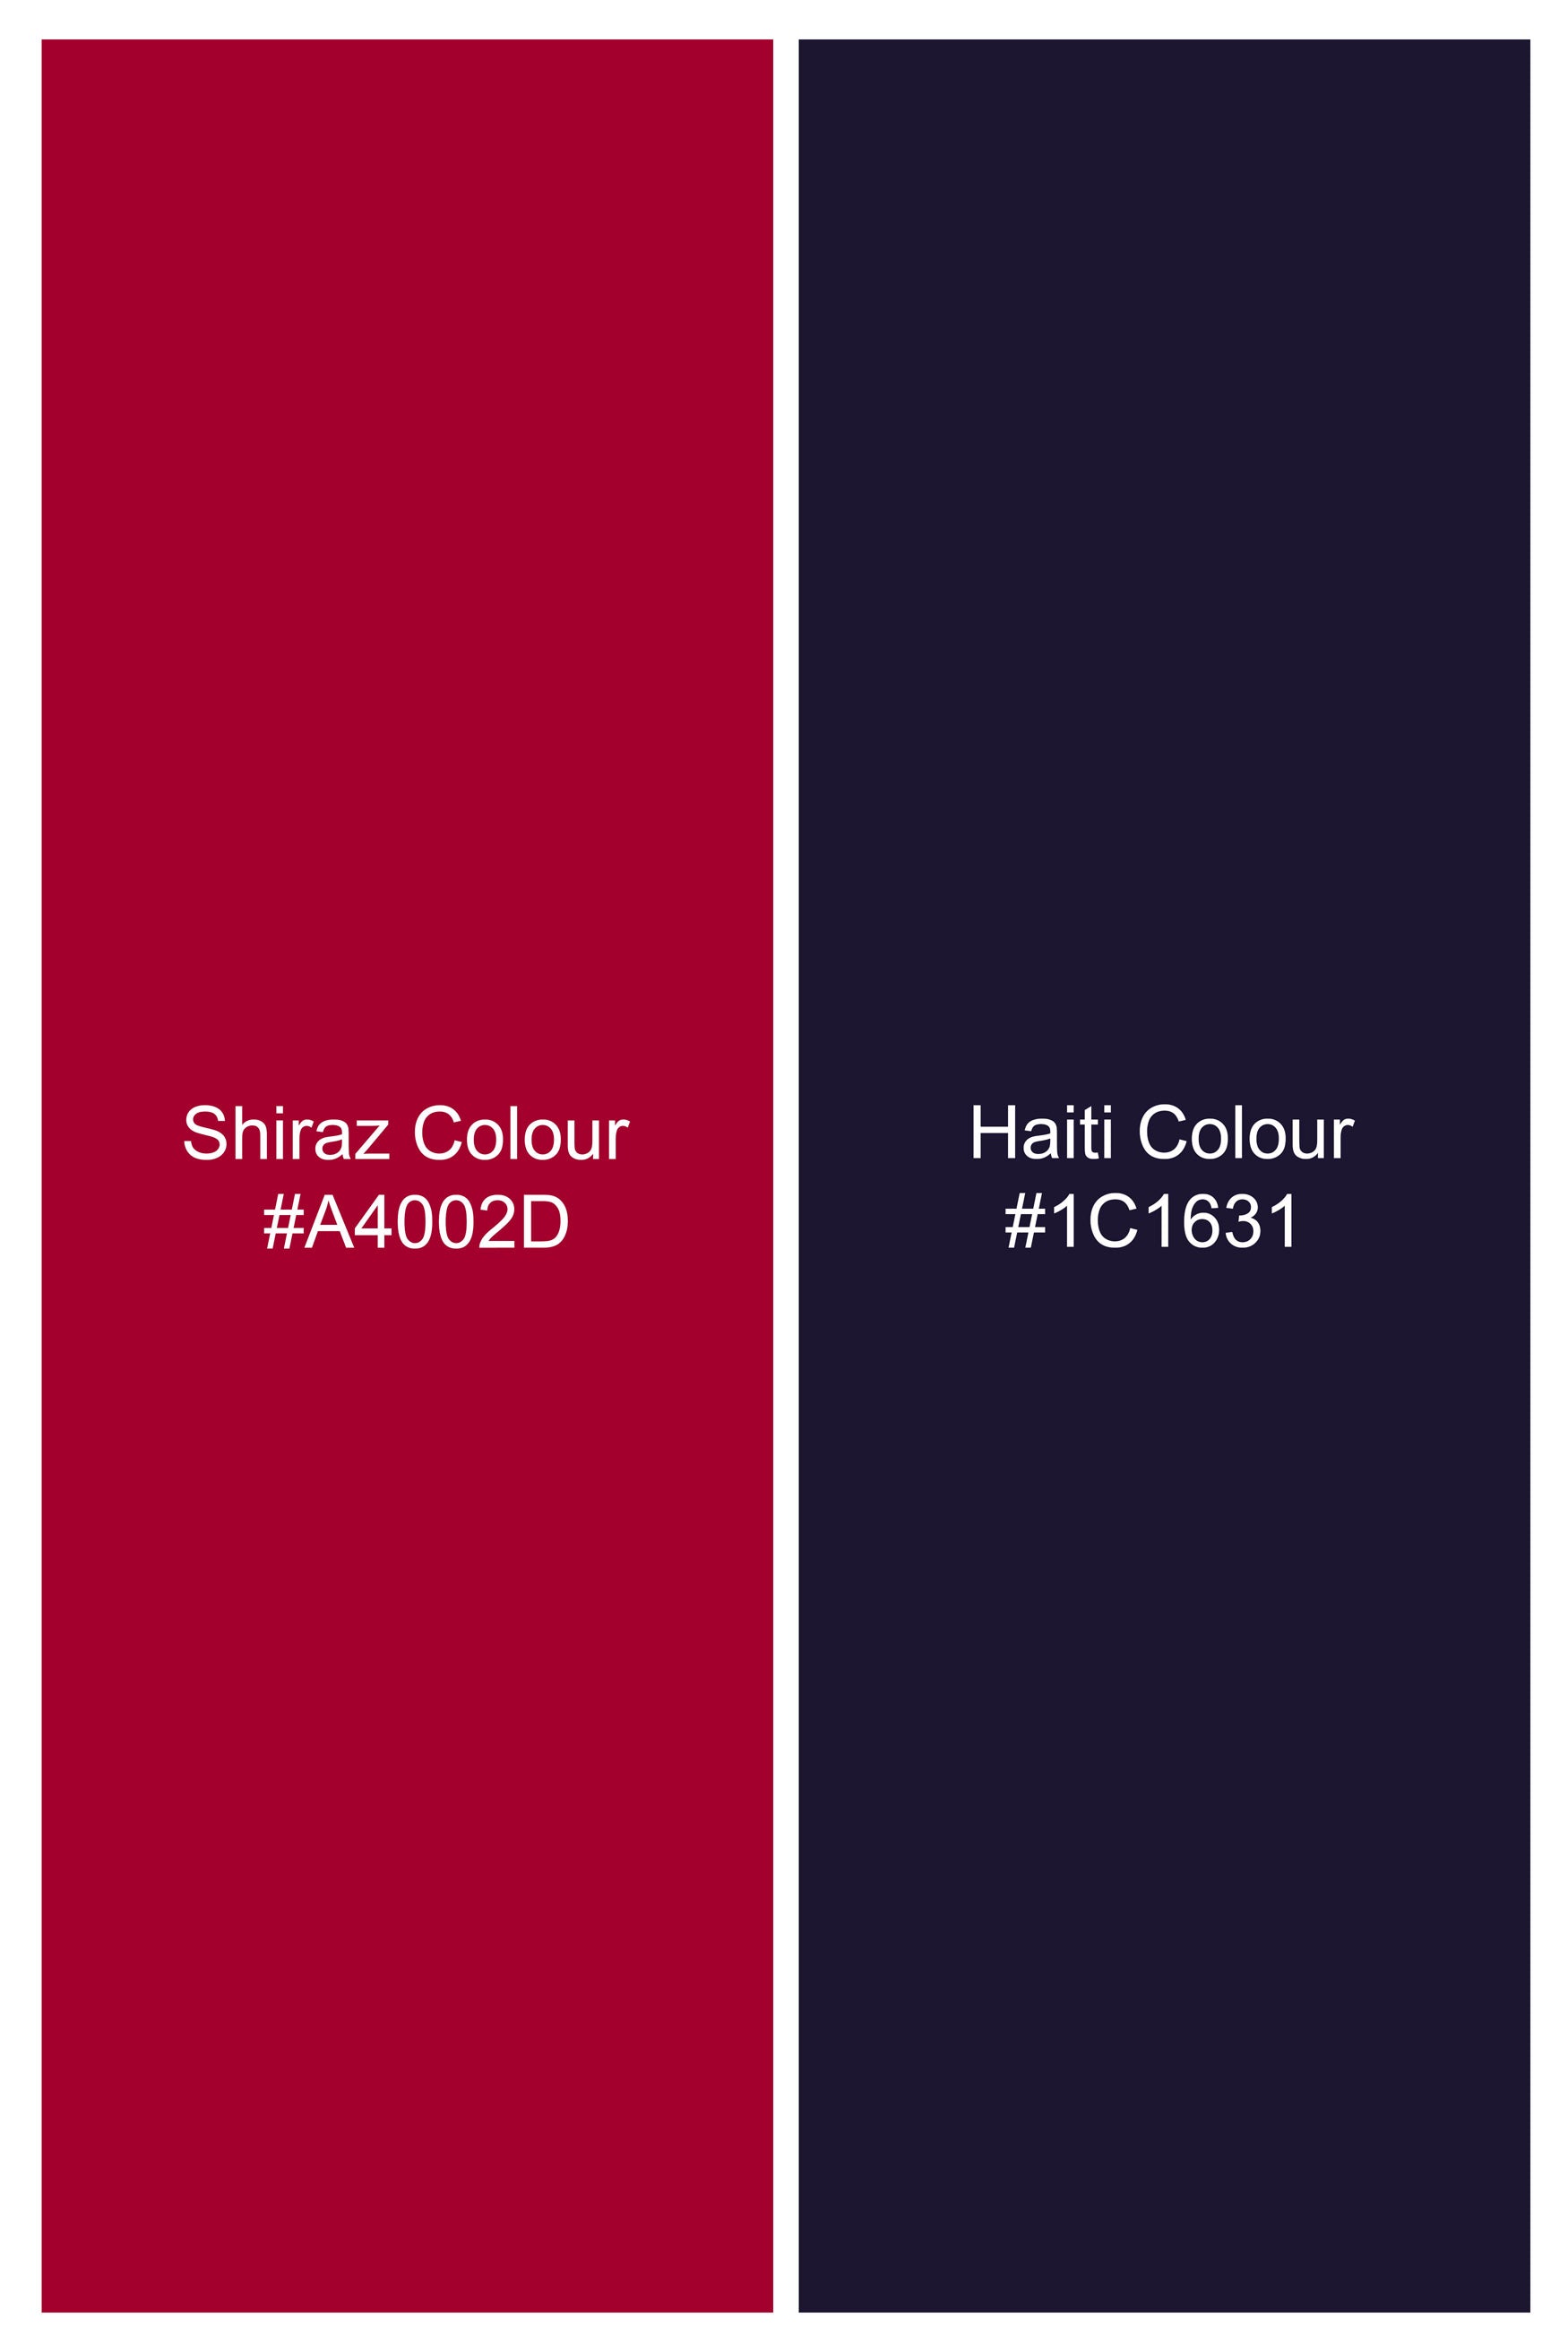 Shiraz Red and Haiti Blue Twill Checkered Premium Cotton Shirt 11676-CC-38, 11676-CC-H-38, 11676-CC-39, 11676-CC-H-39, 11676-CC-40, 11676-CC-H-40, 11676-CC-42, 11676-CC-H-42, 11676-CC-44, 11676-CC-H-44, 11676-CC-46, 11676-CC-H-46, 11676-CC-48, 11676-CC-H-48, 11676-CC-50, 11676-CC-H-50, 11676-CC-52, 11676-CC-H-52